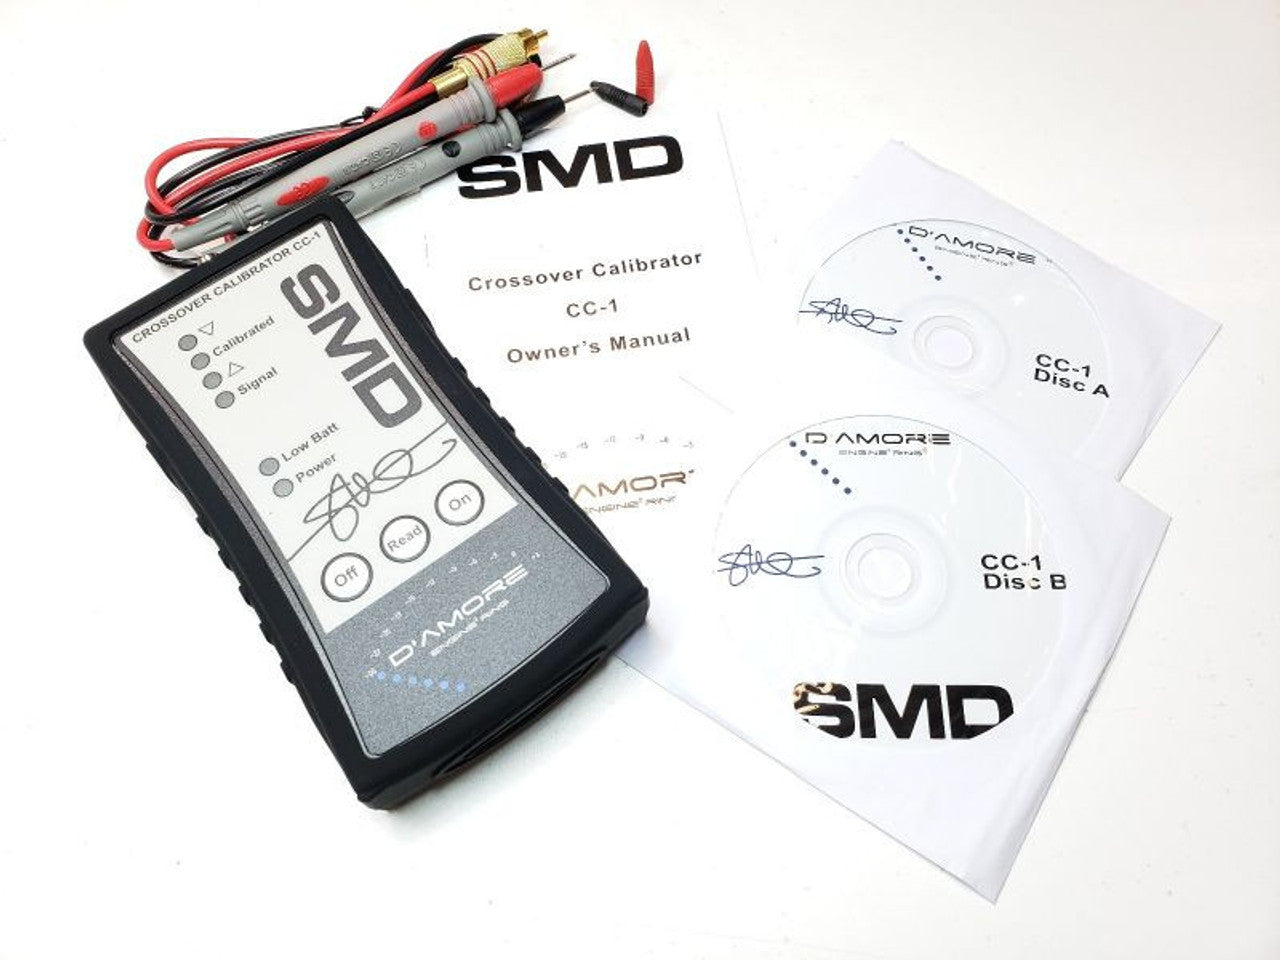 SMD Crossover Calibrator CC-1